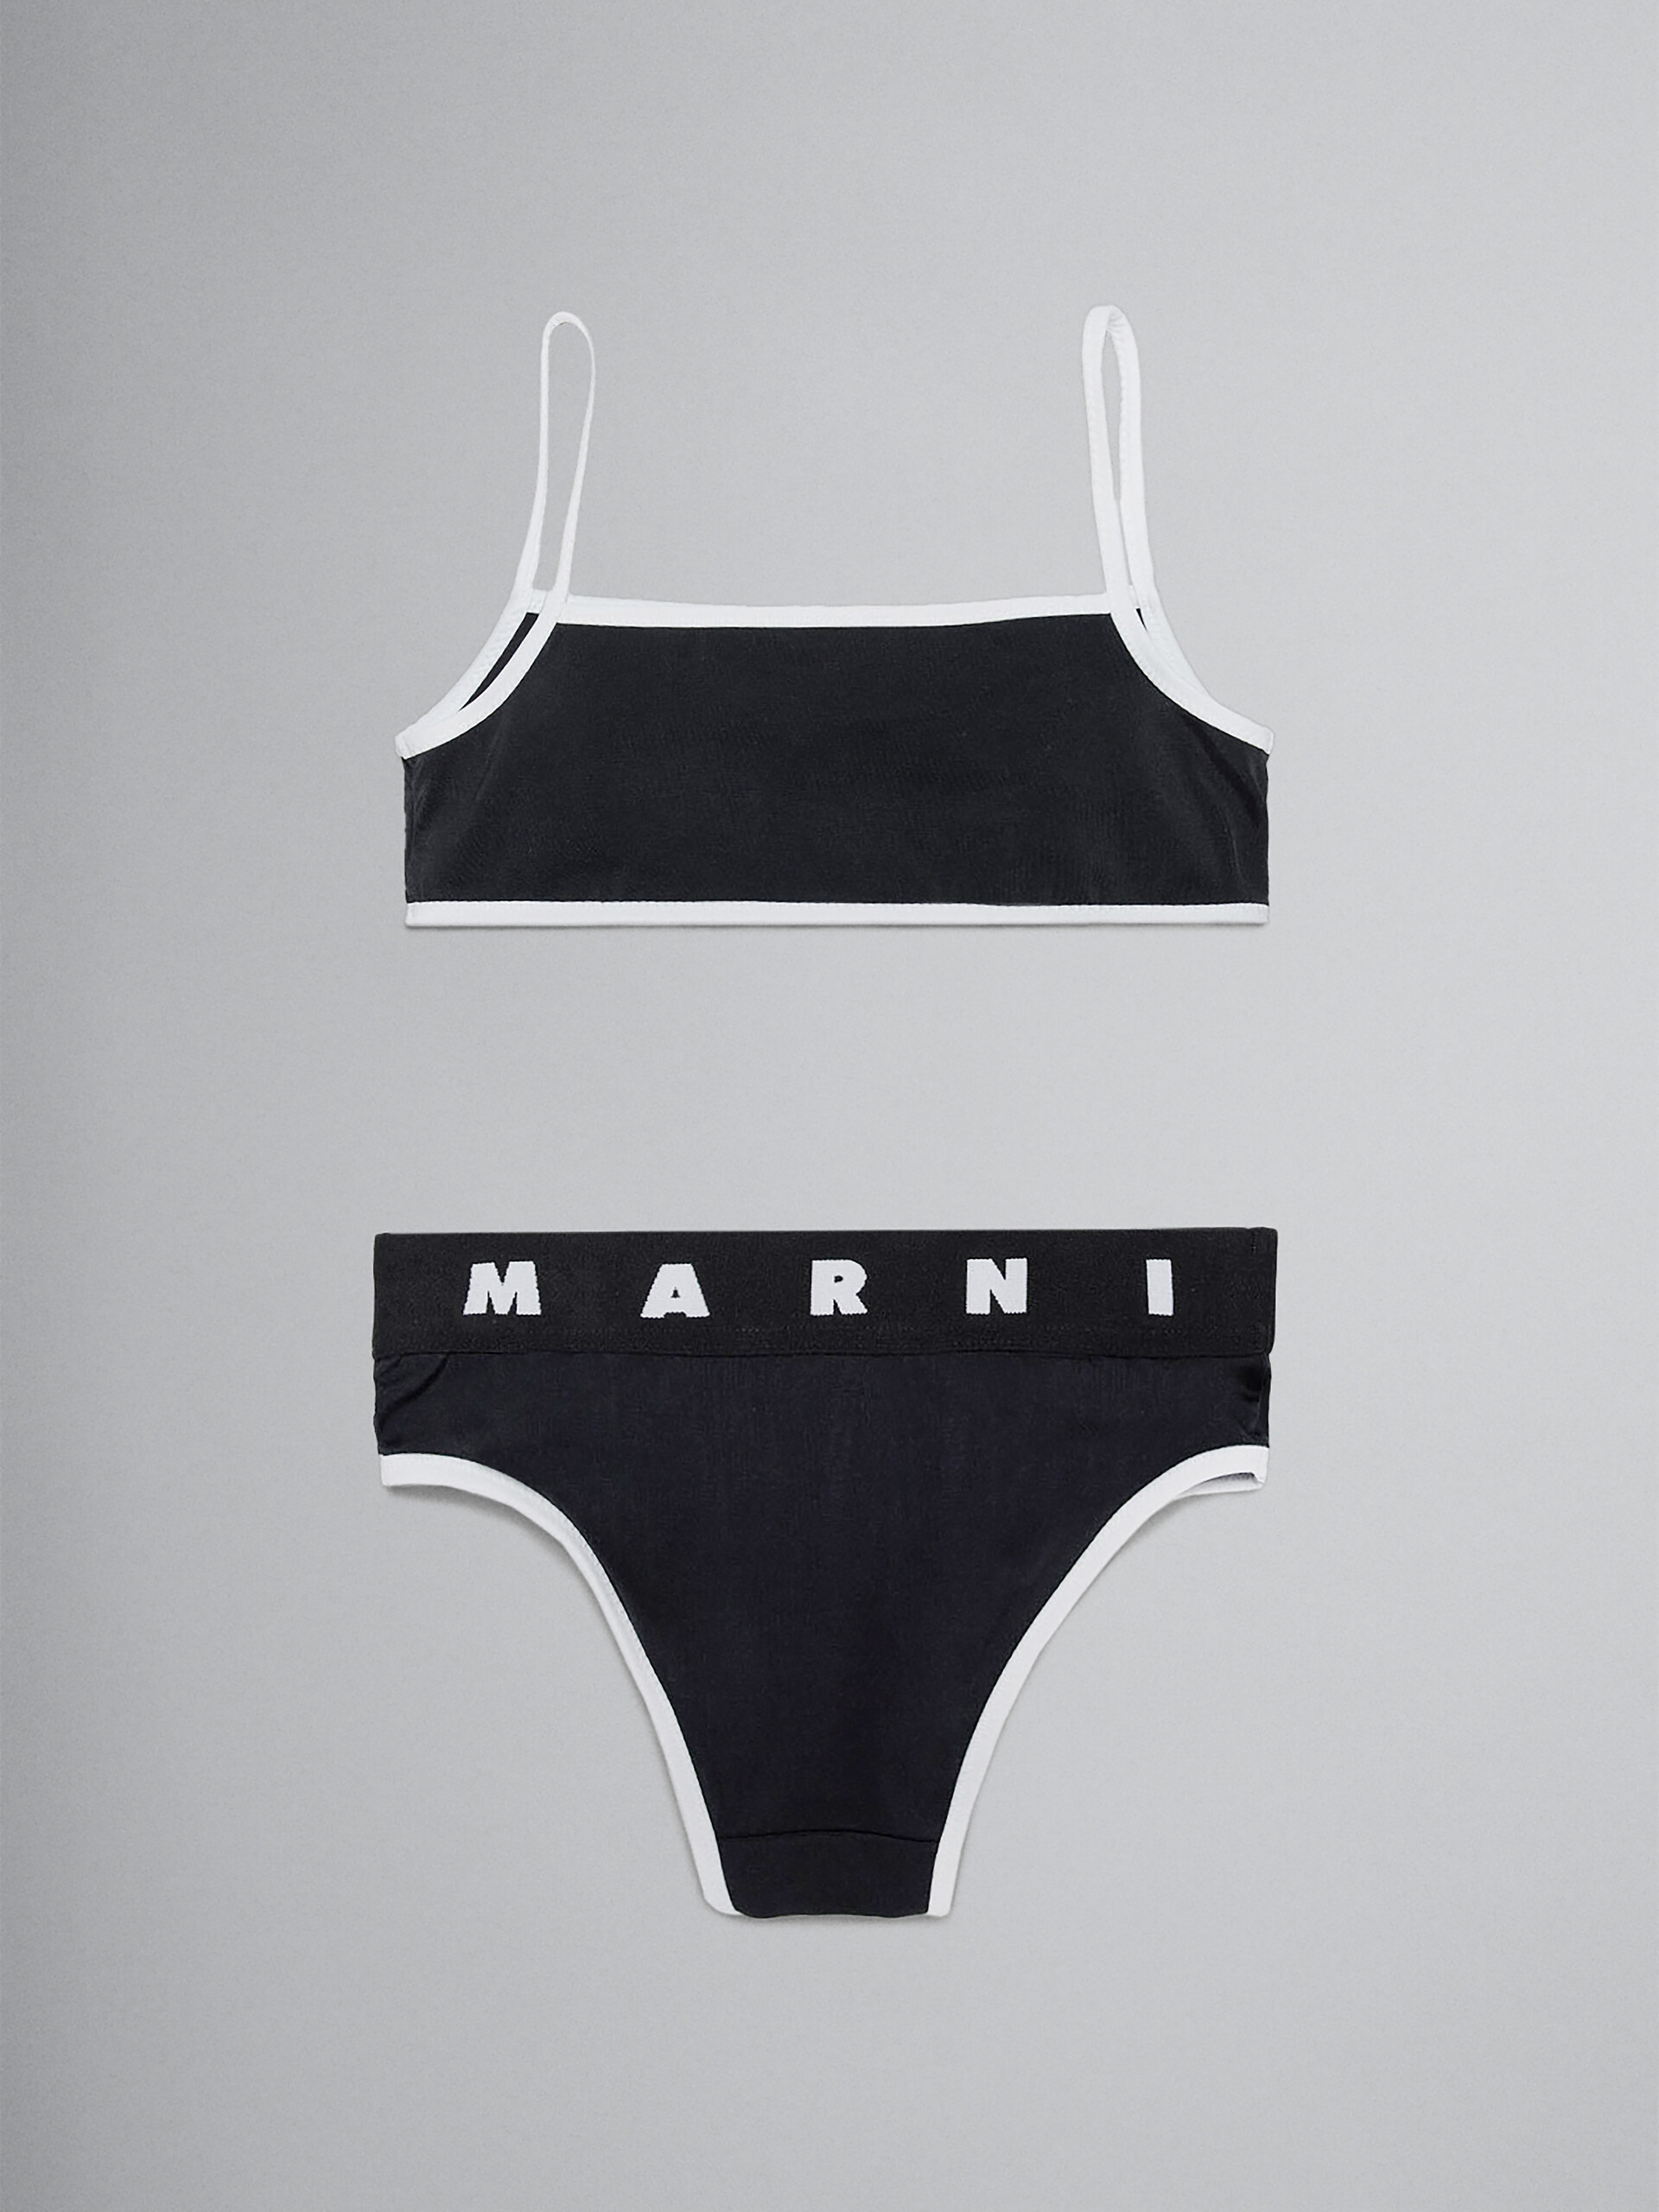 Black bikini with logo - Beachwear - Image 2